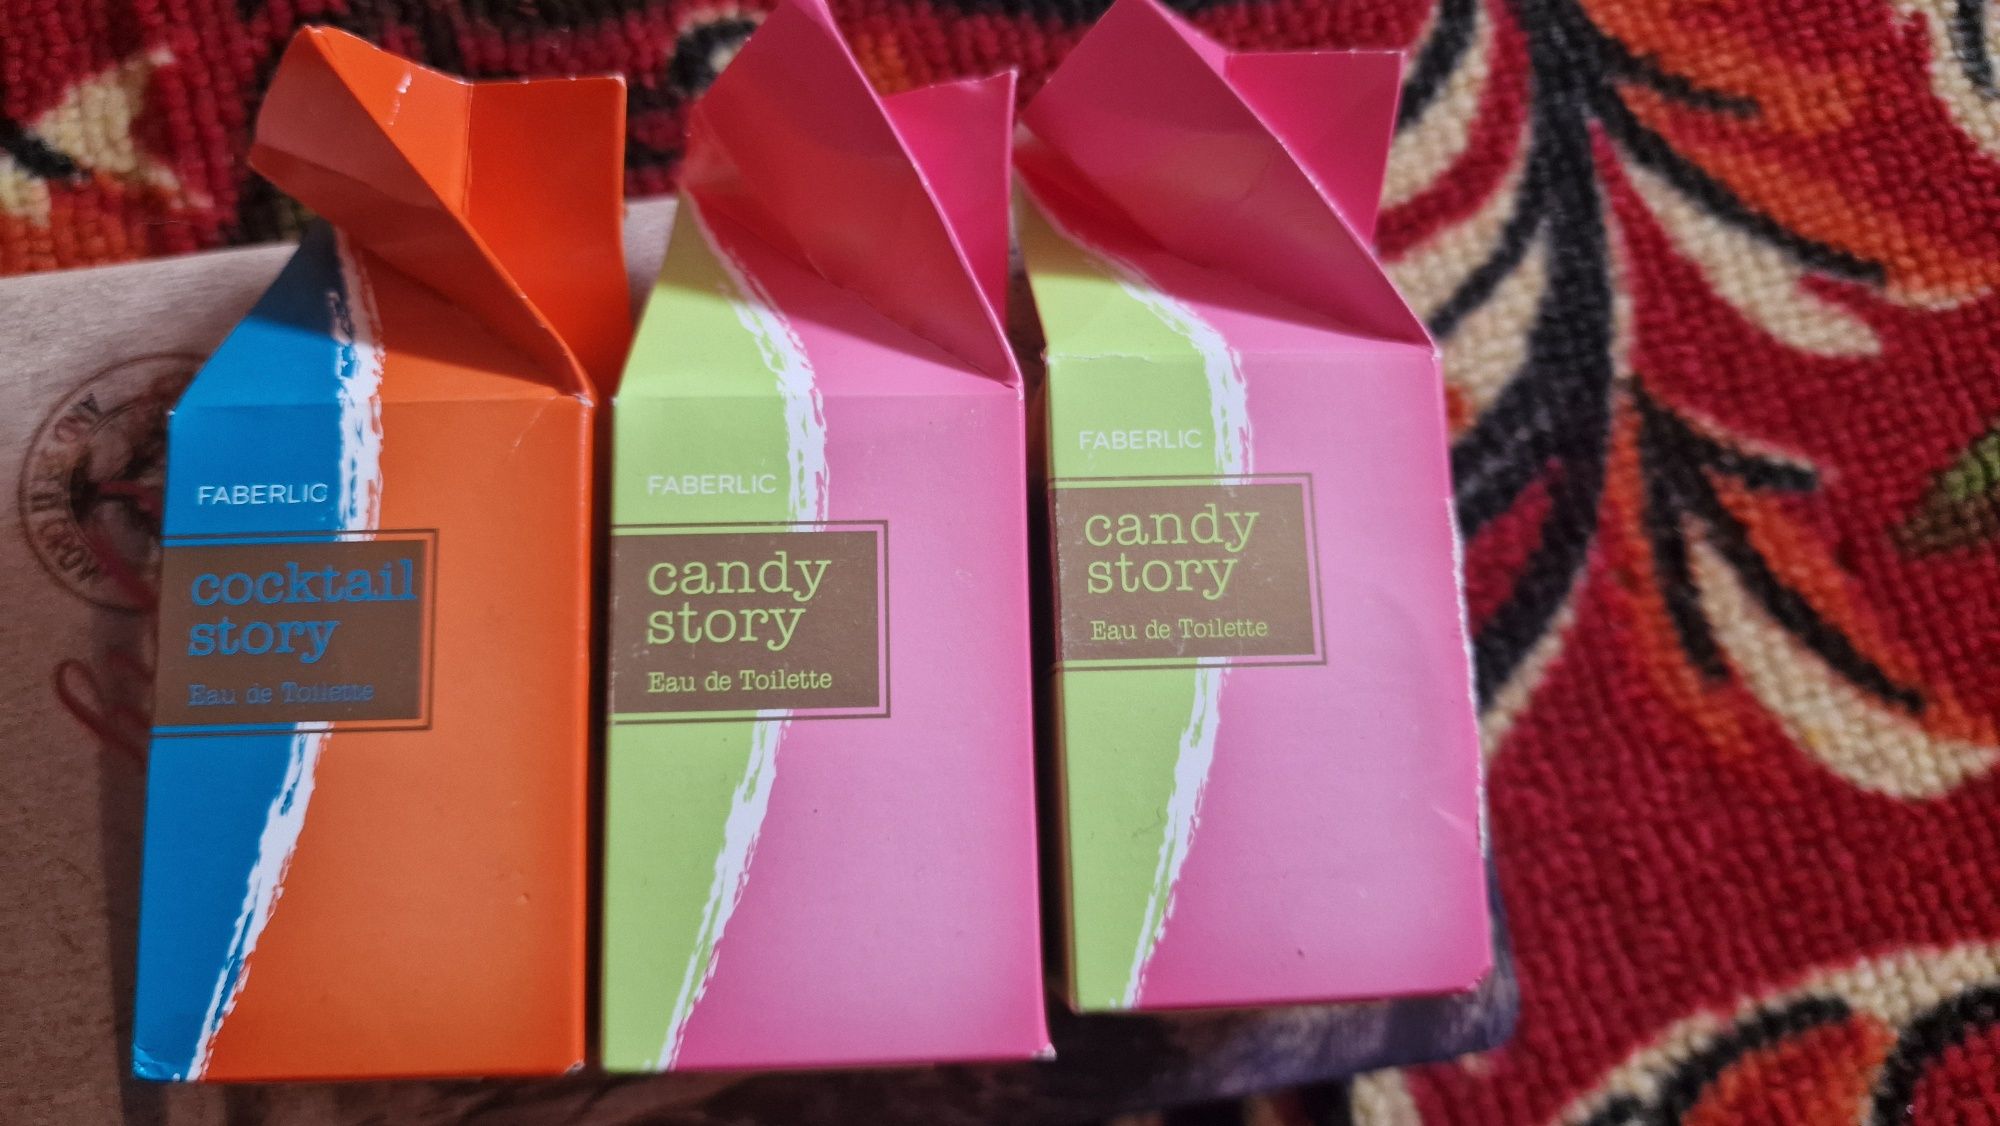 Candy story orginal faberlic